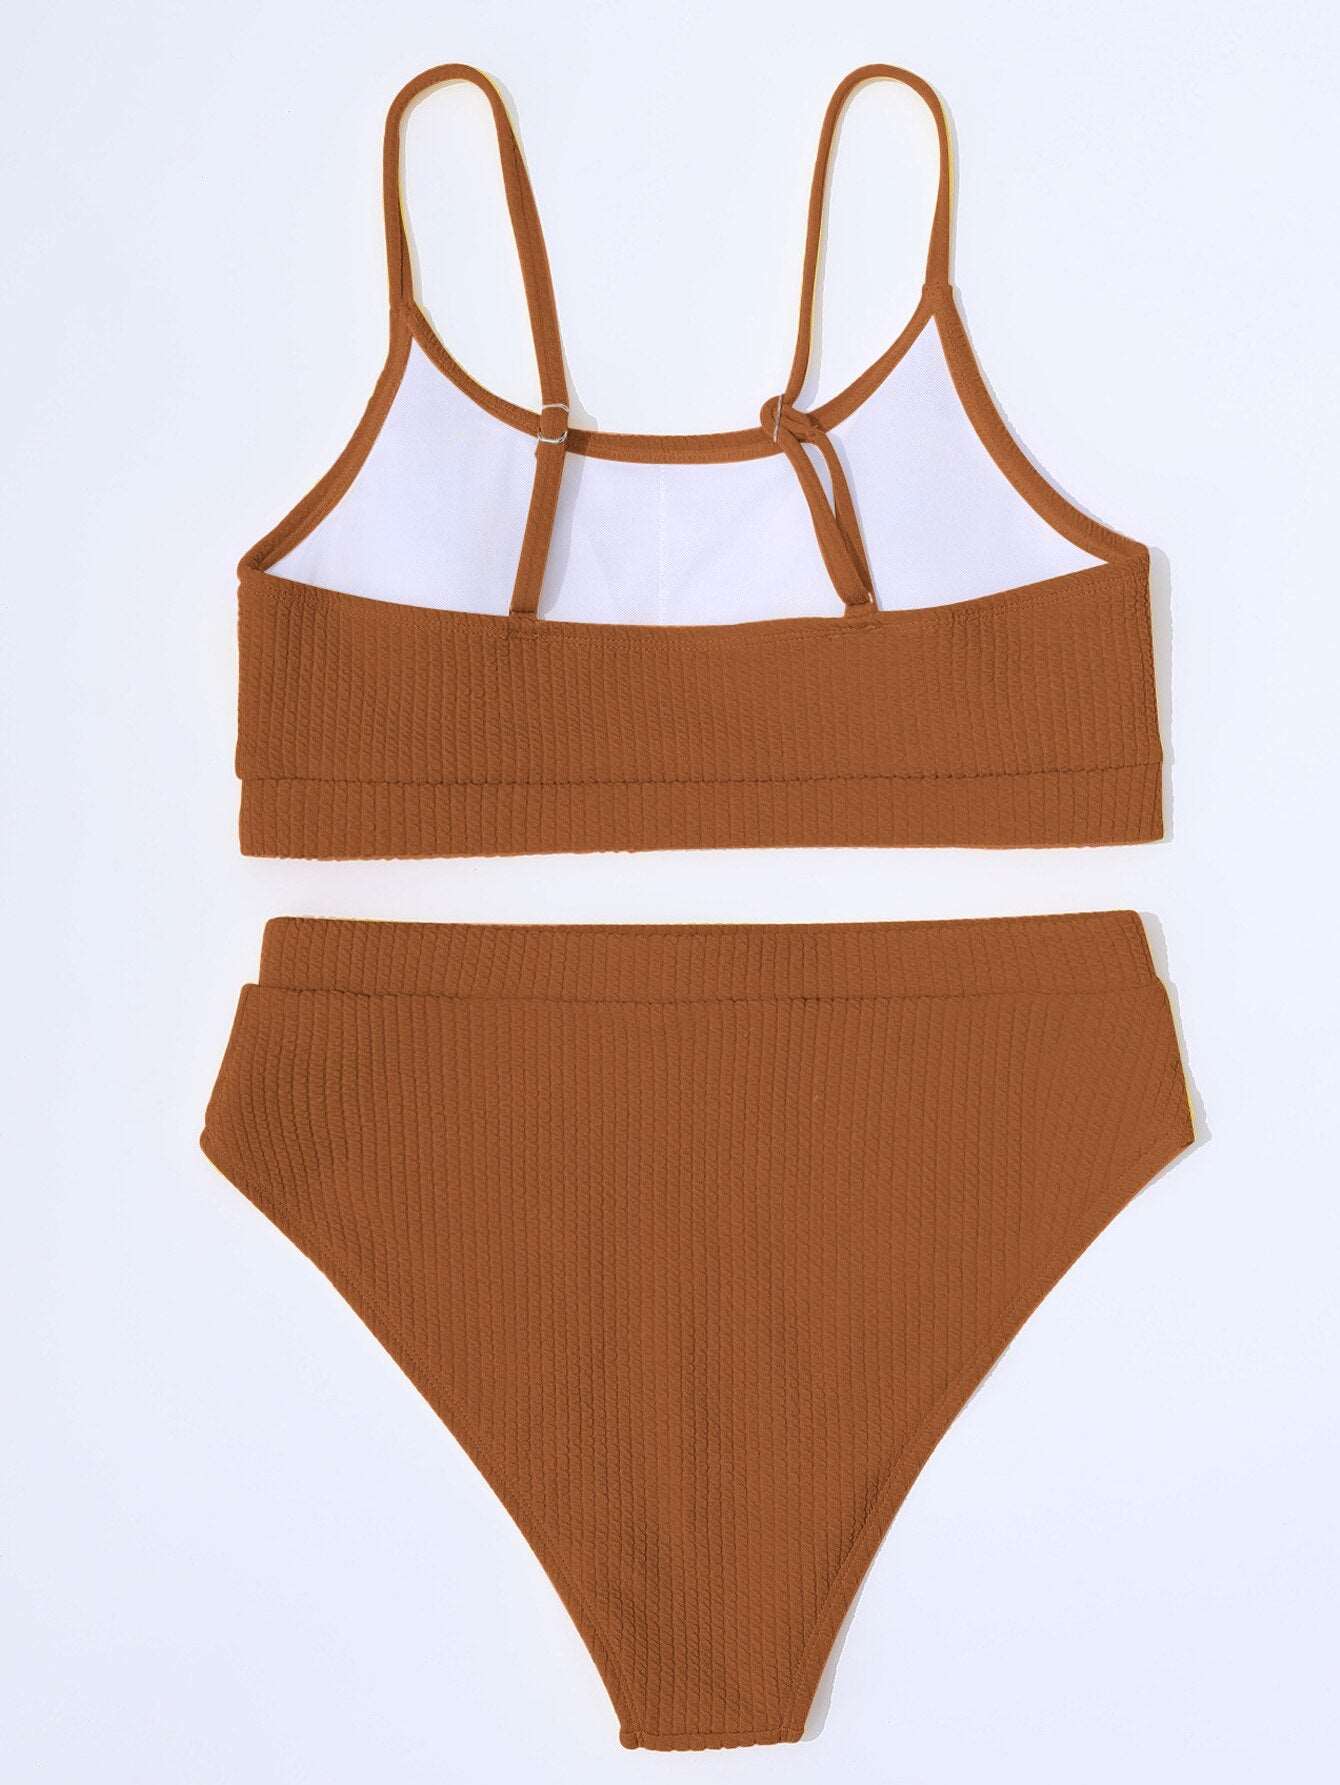 ROSVIGOR Ribbed Two Piece Bikini Swimsuit: High-Waisted Tummy Control Swimwear Set for Women